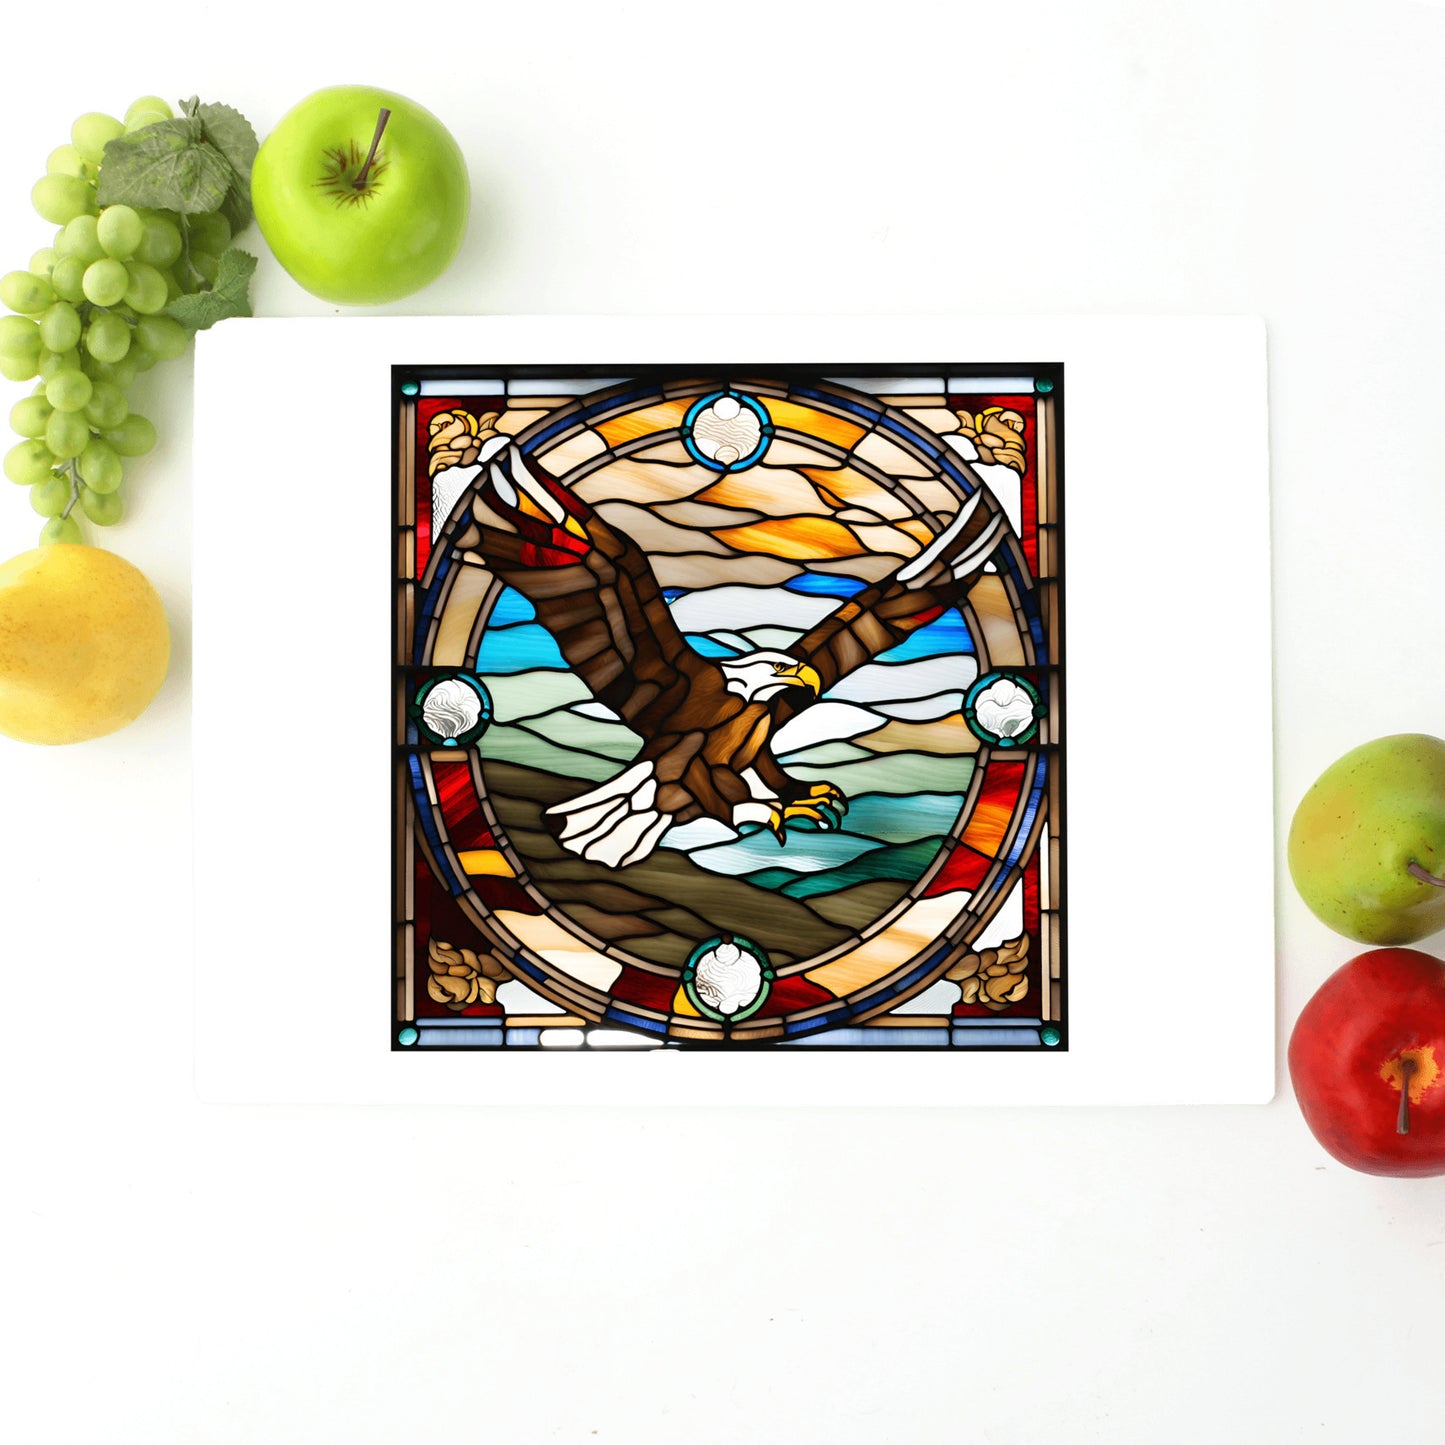 Bald Eagle stain glass design printed on a glass cutting board unique gift idea